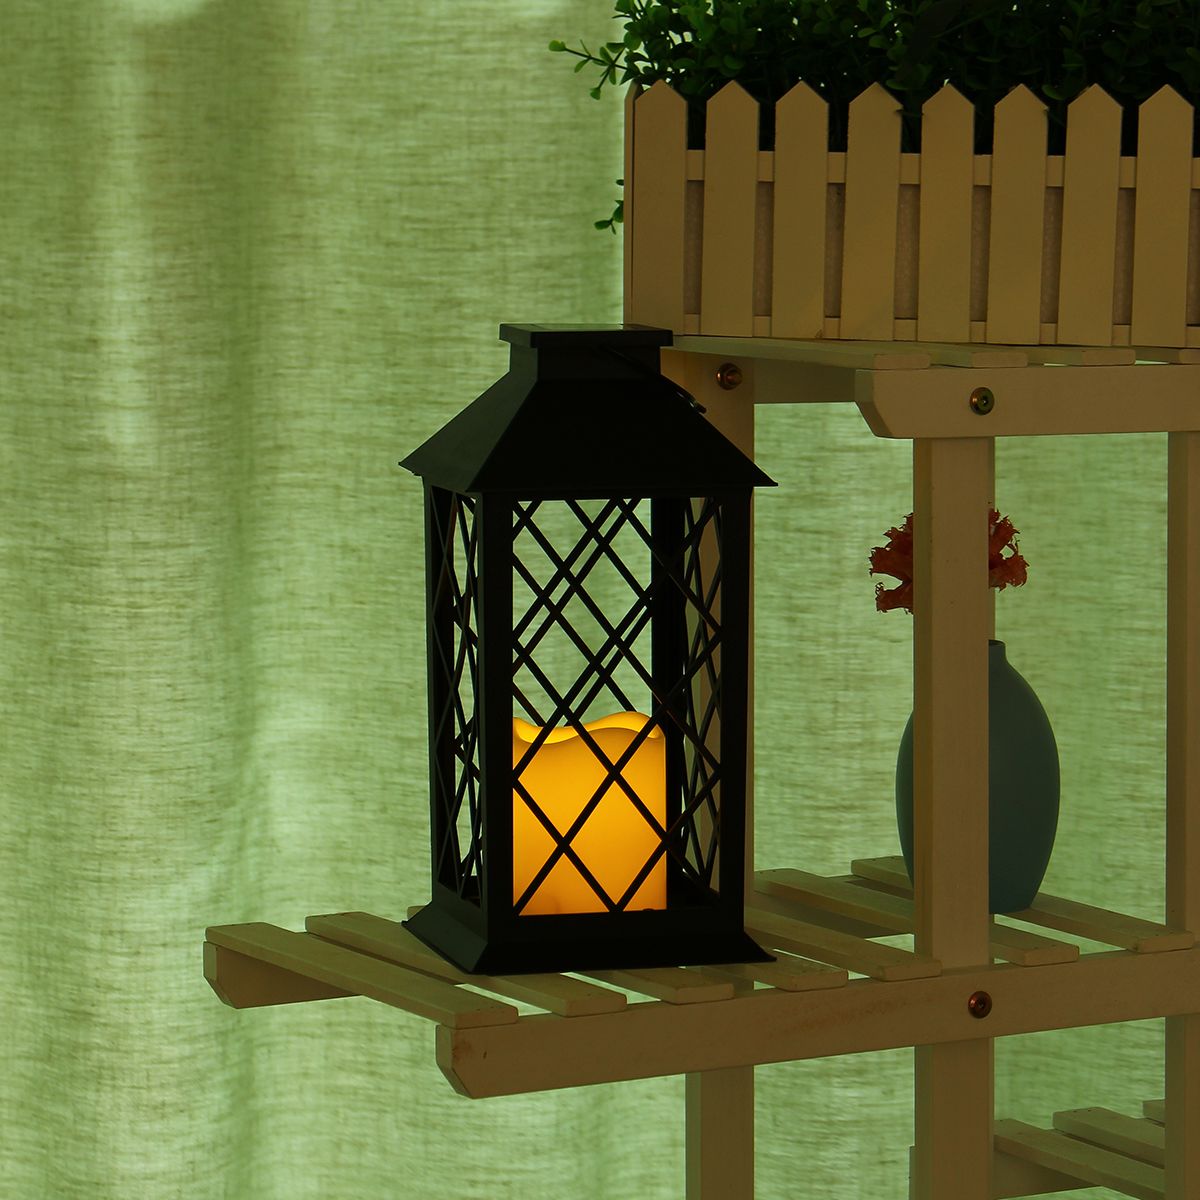 Solar-Powered-Garden-Outdoor-LED-Light-Waterproof-Candle-Lantern-Hanging-Garden-Lamp-1688919